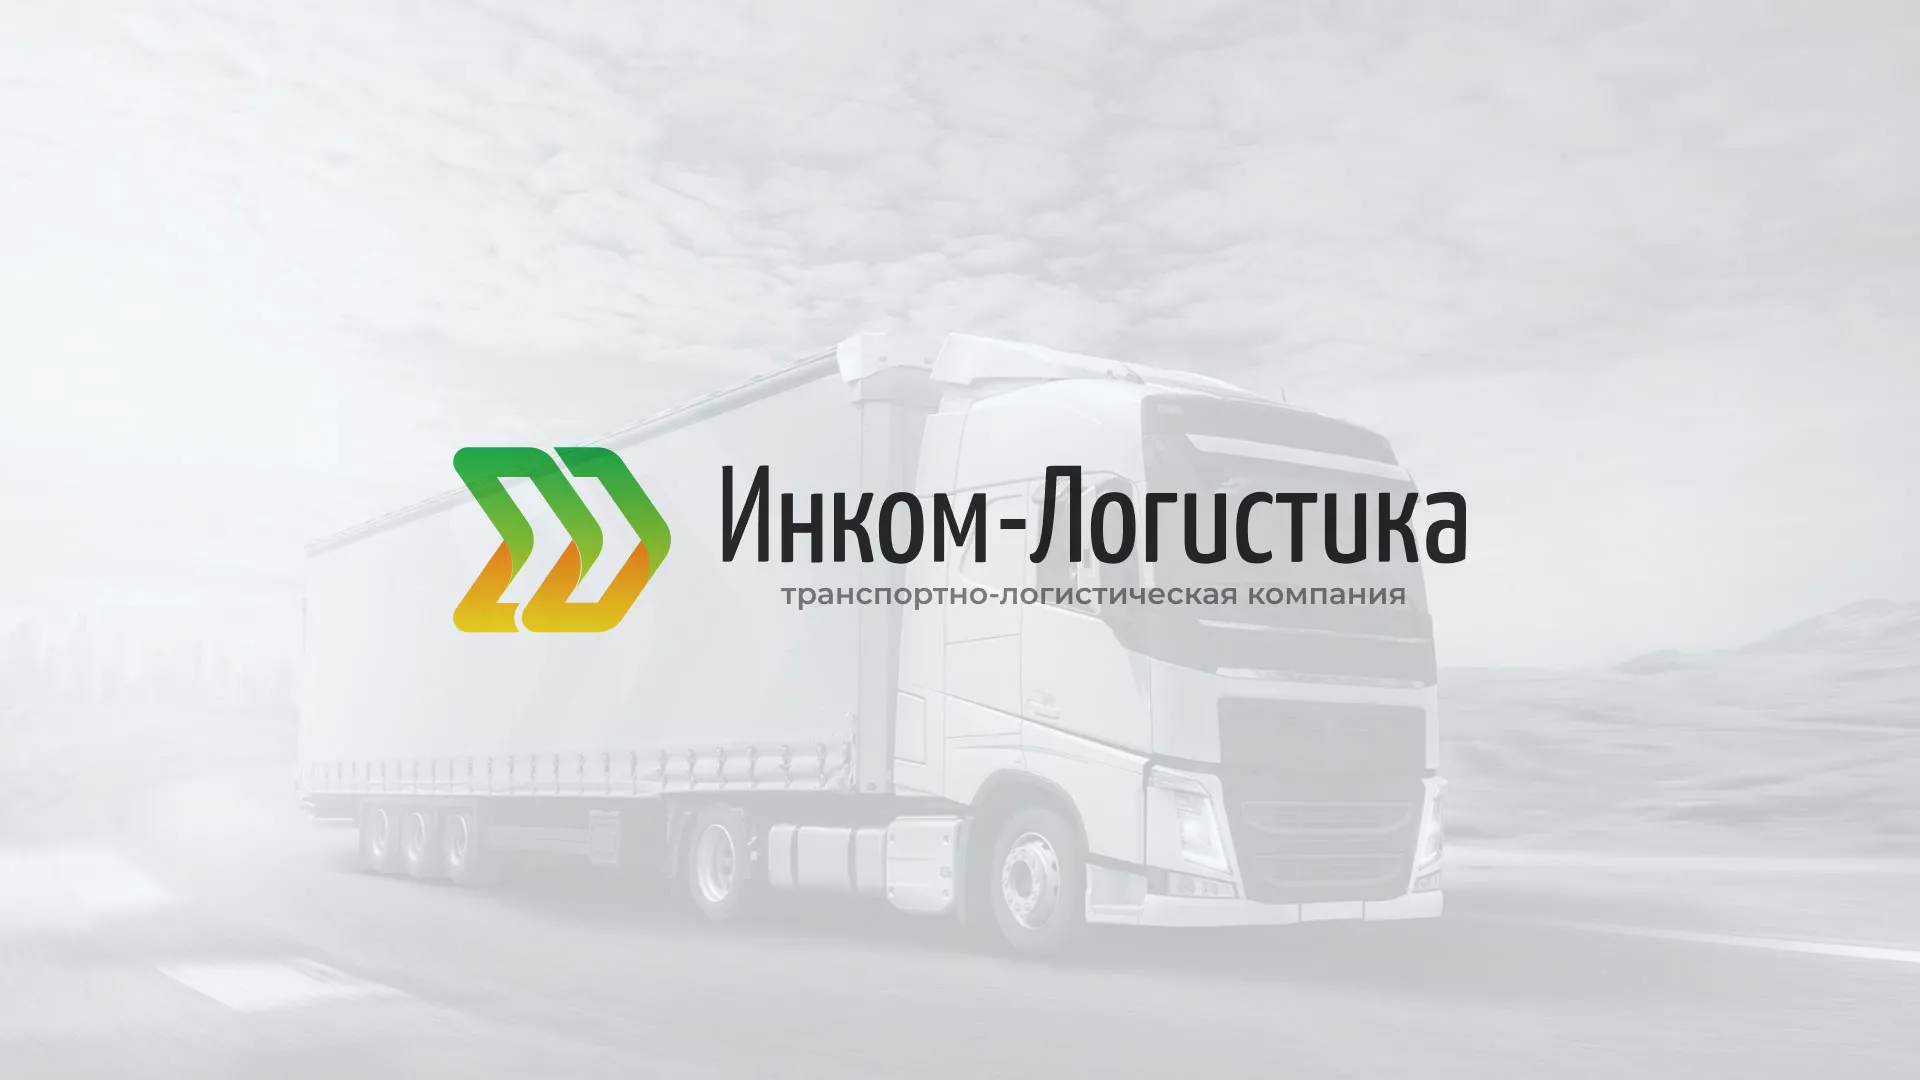 Разработка логотипа и сайта компании «Инком-Логистика» в Вологде